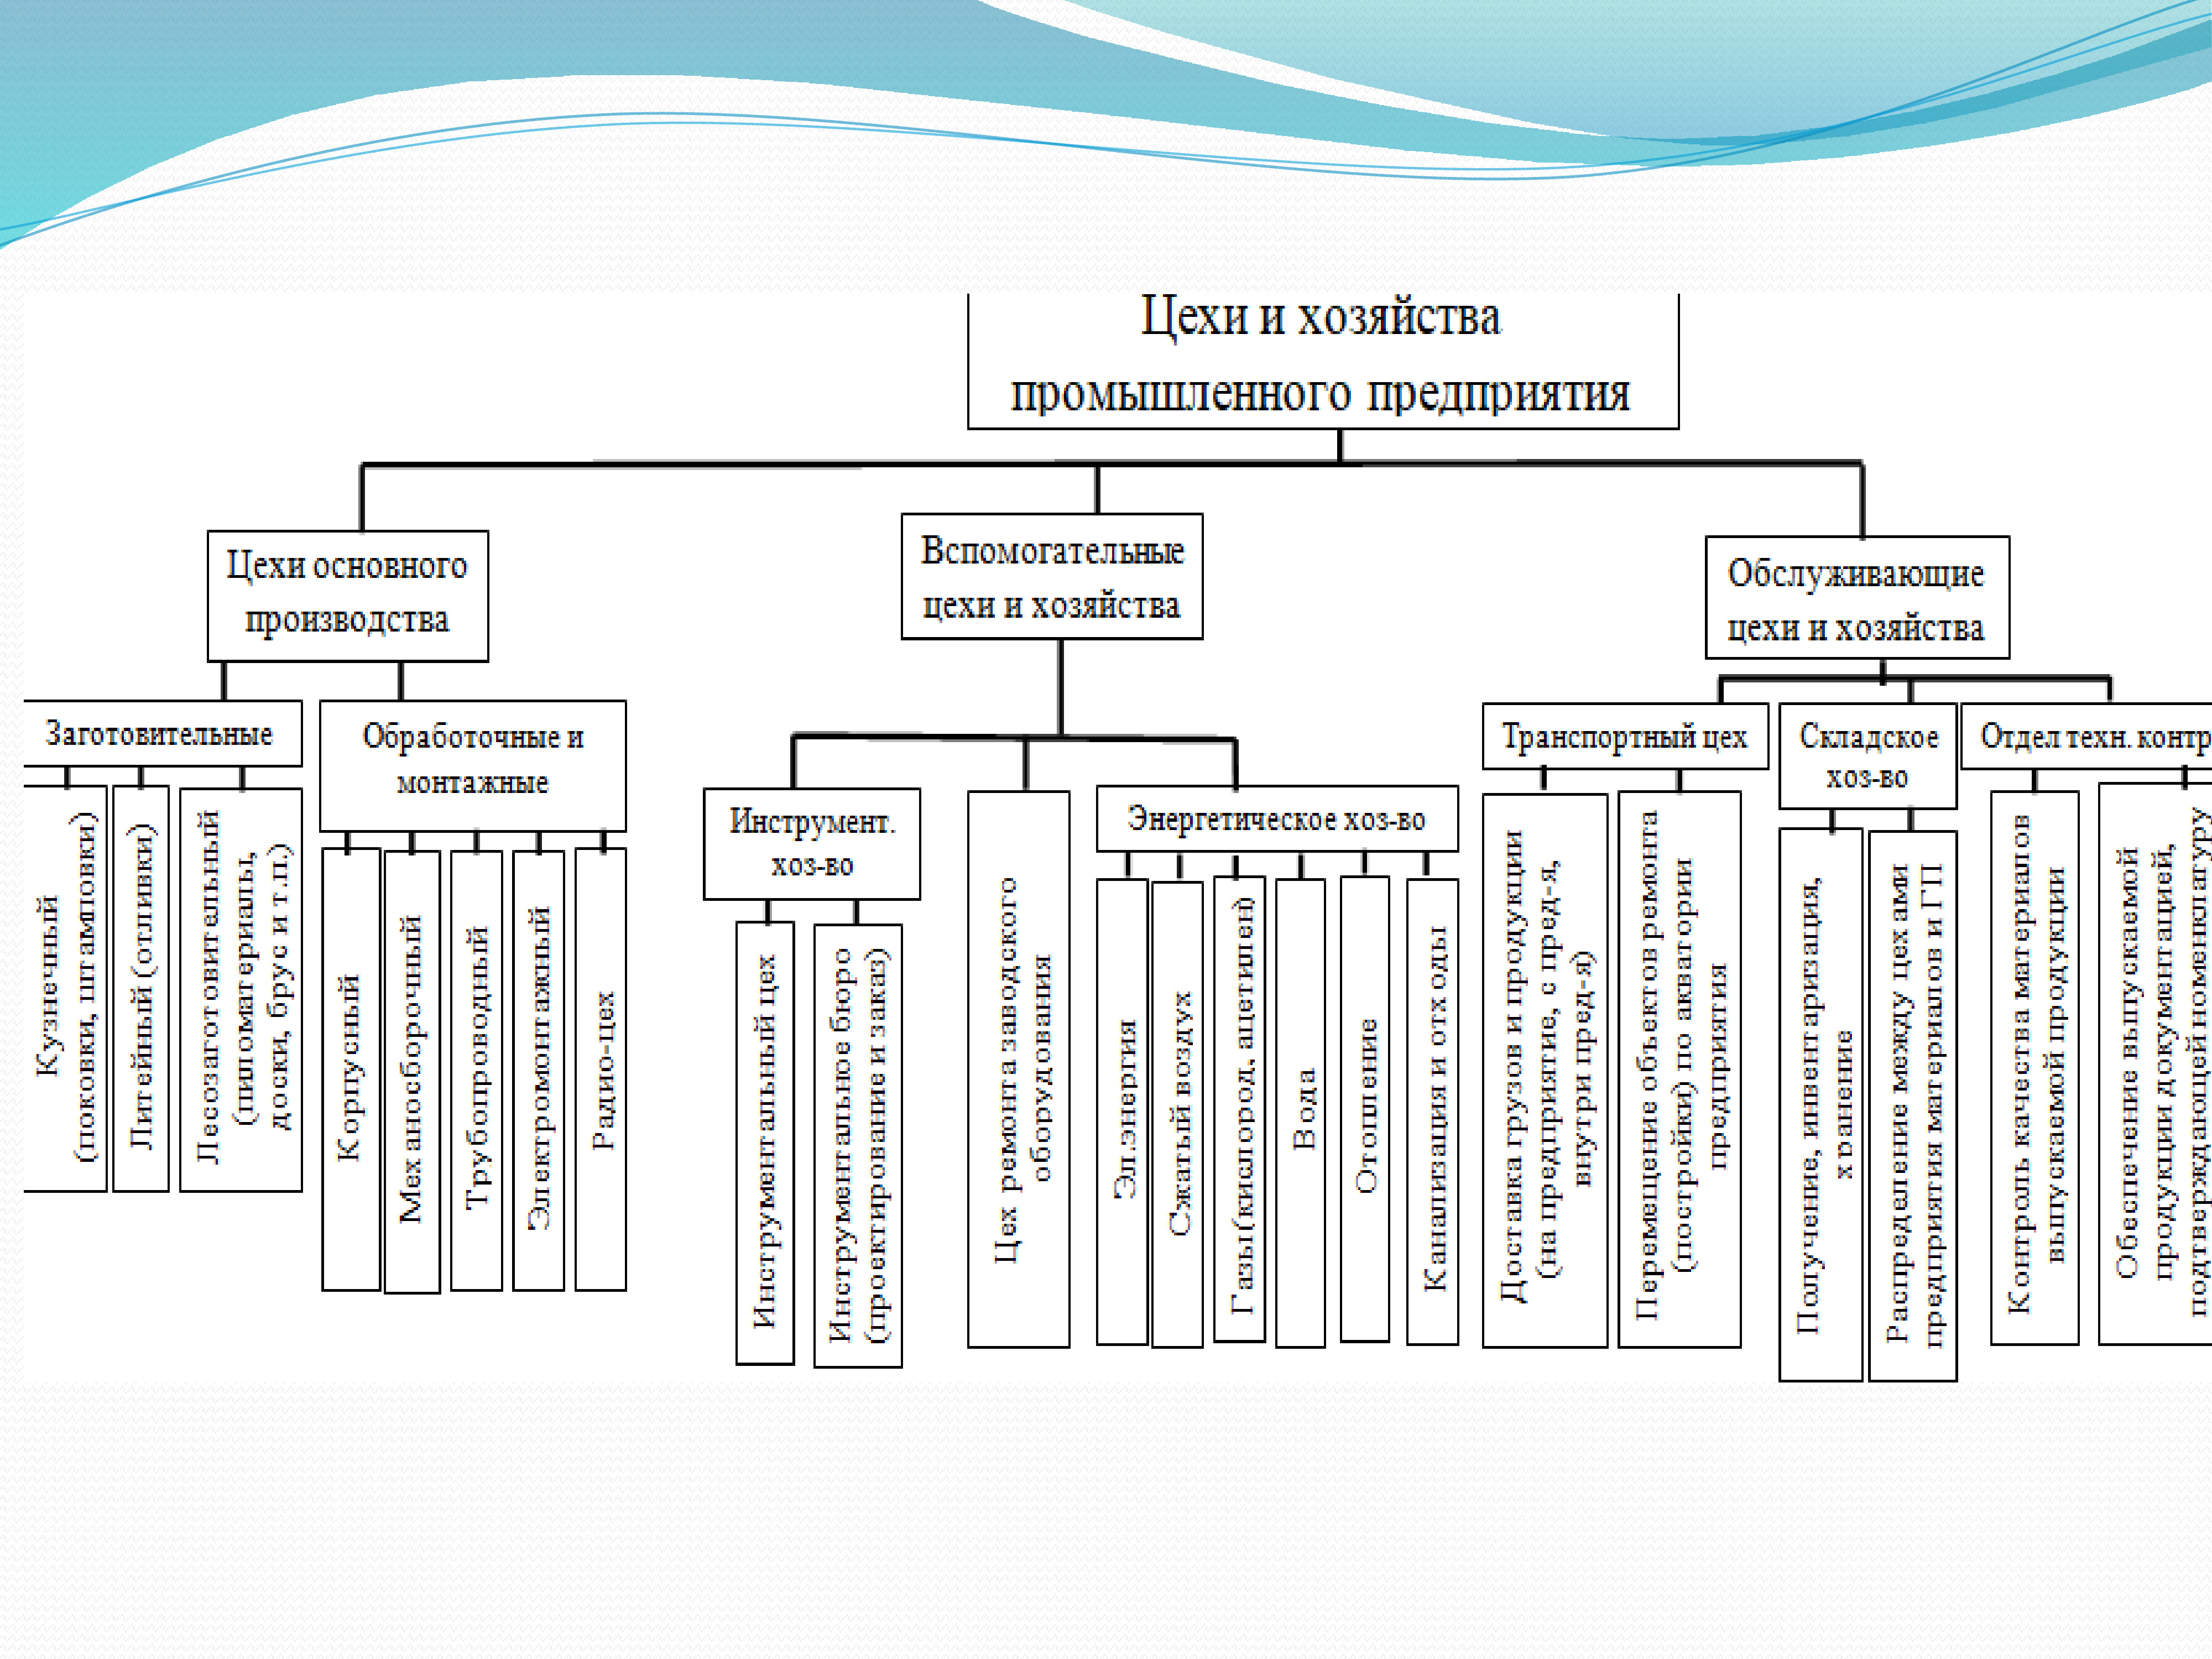 Организационная структура цеха предприятия